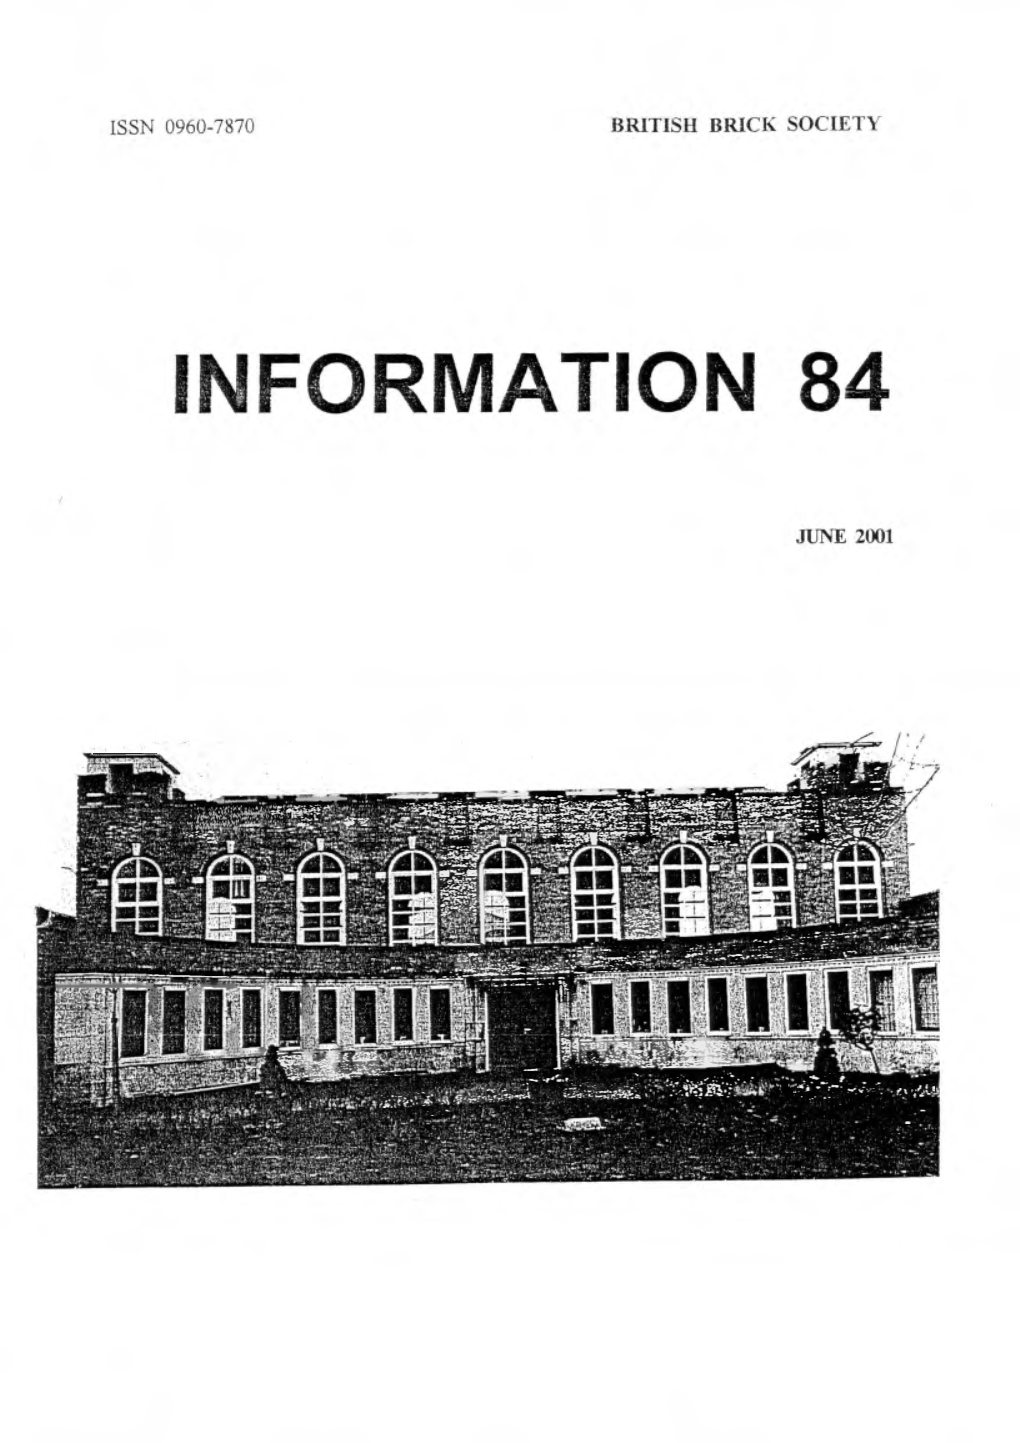 Information 84